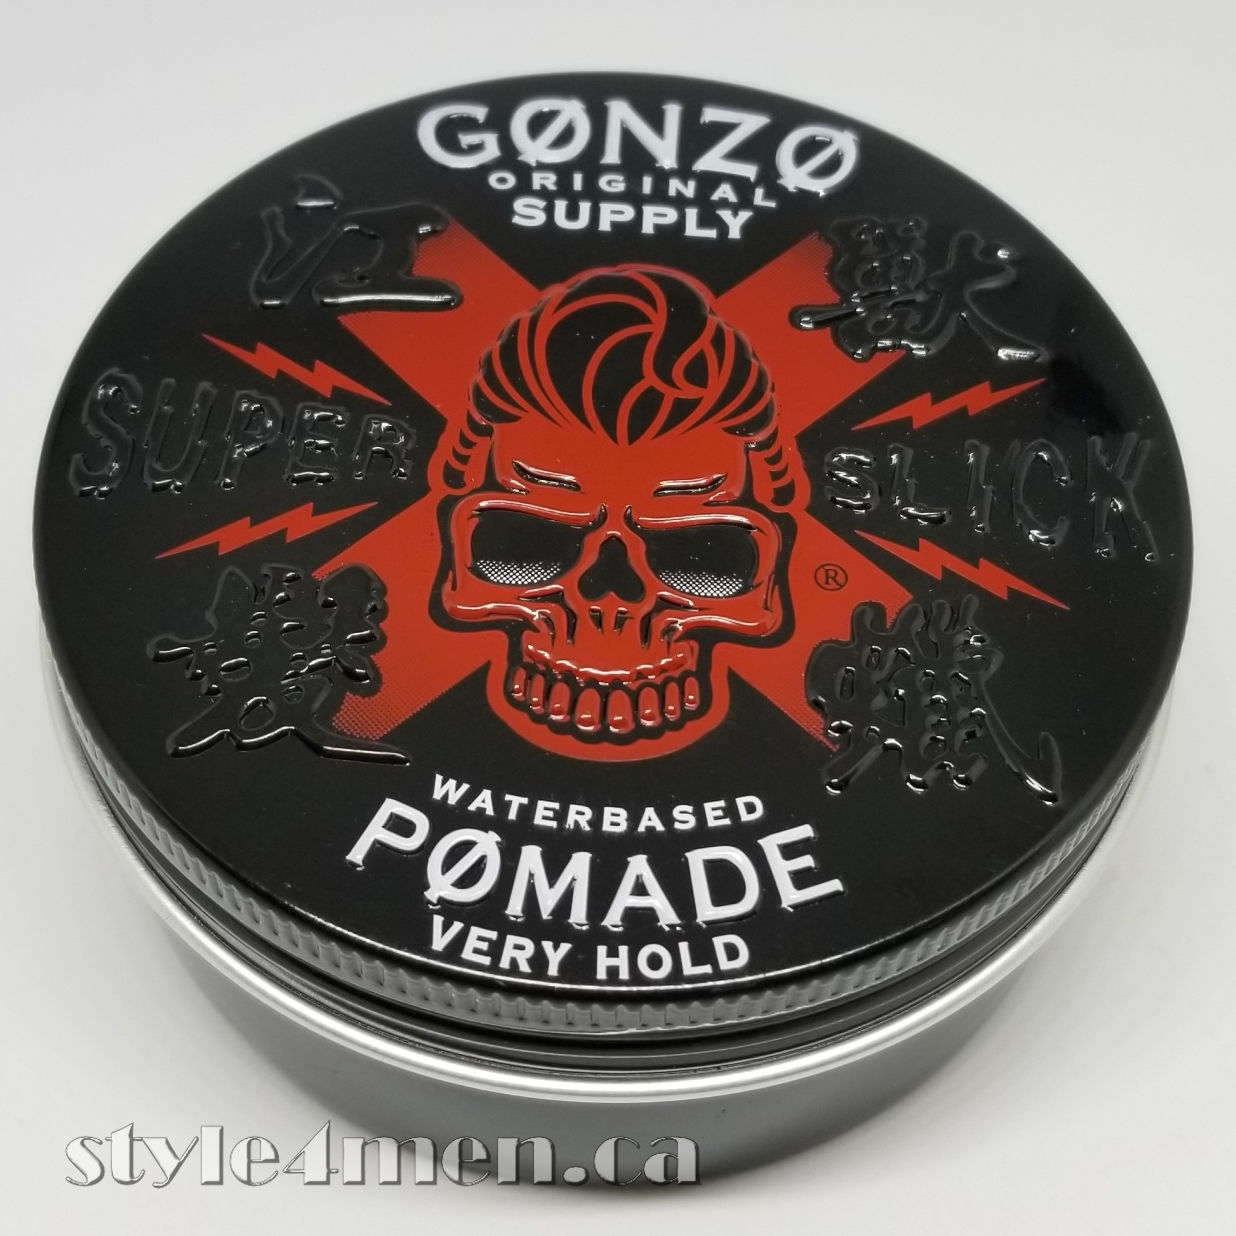 Gonzo Original Supply Pomade